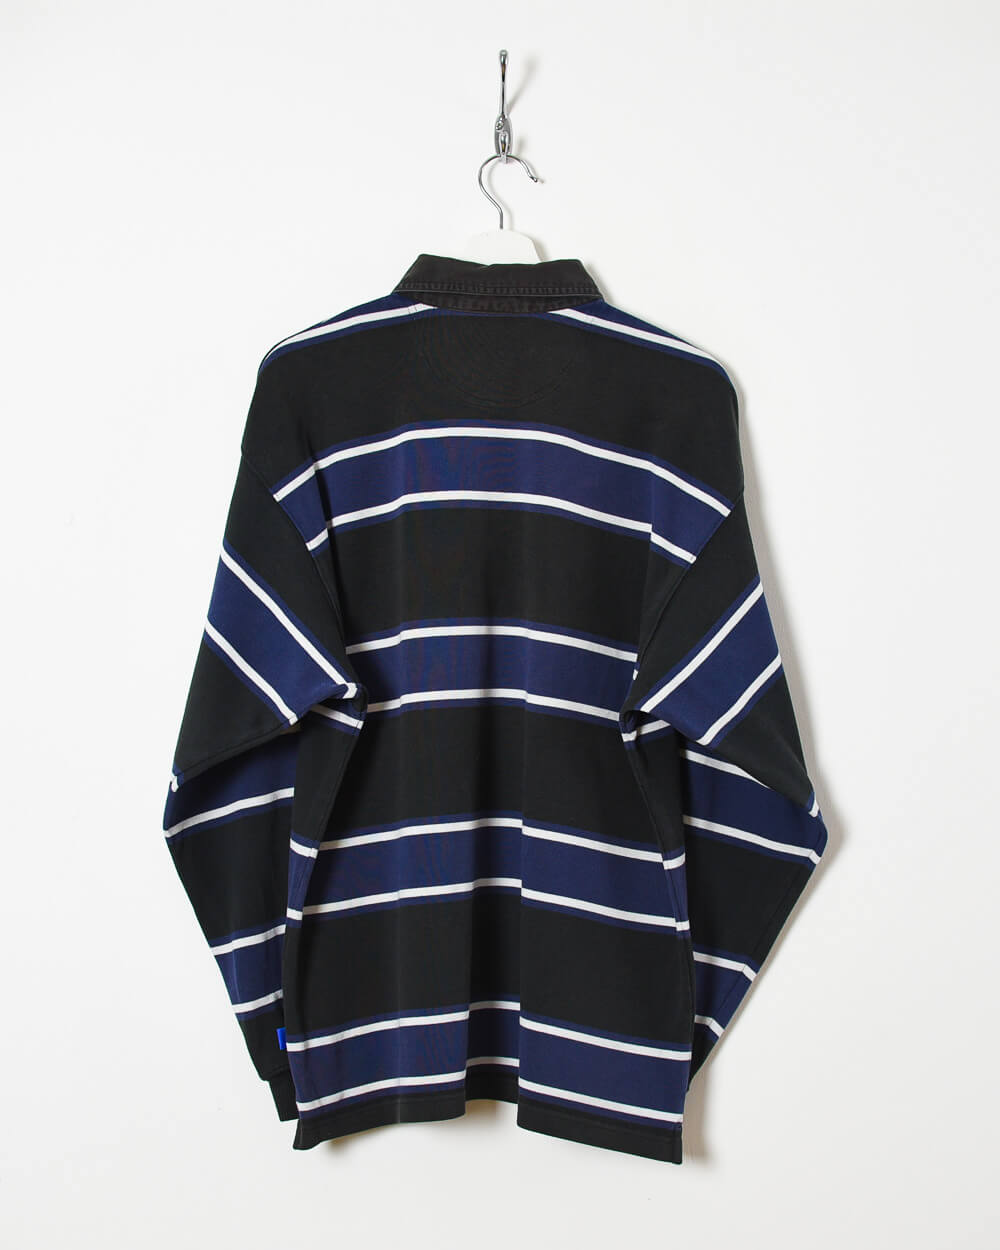 Adidas Sweatshirt - Large - Domno Vintage 90s, 80s, 00s Retro and Vintage Clothing 